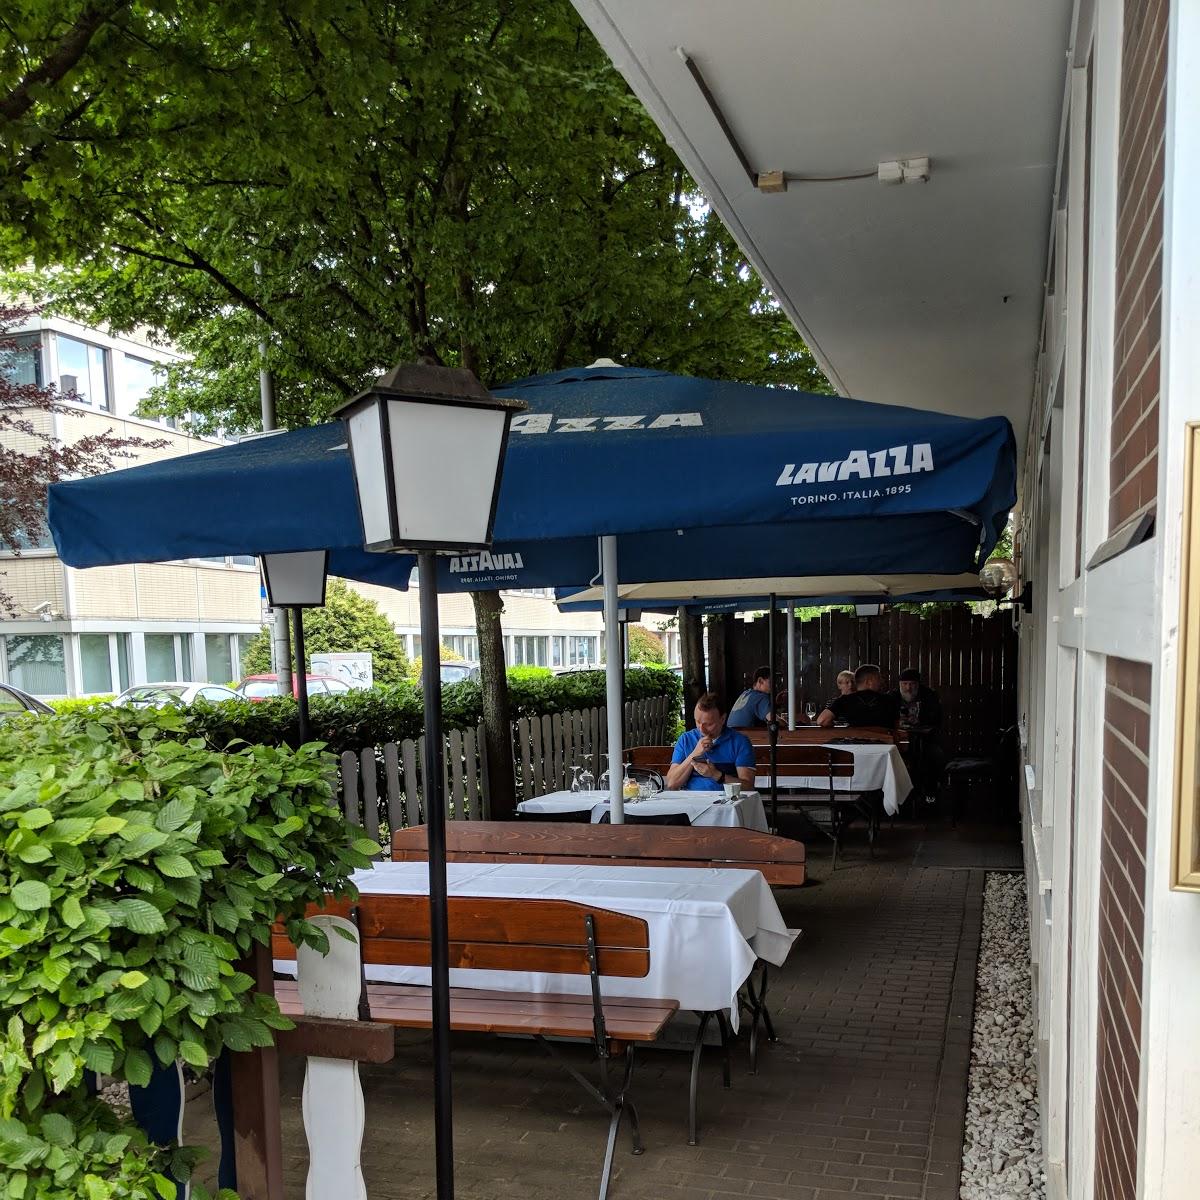 Restaurant "Maindiner" in Frankfurt am Main